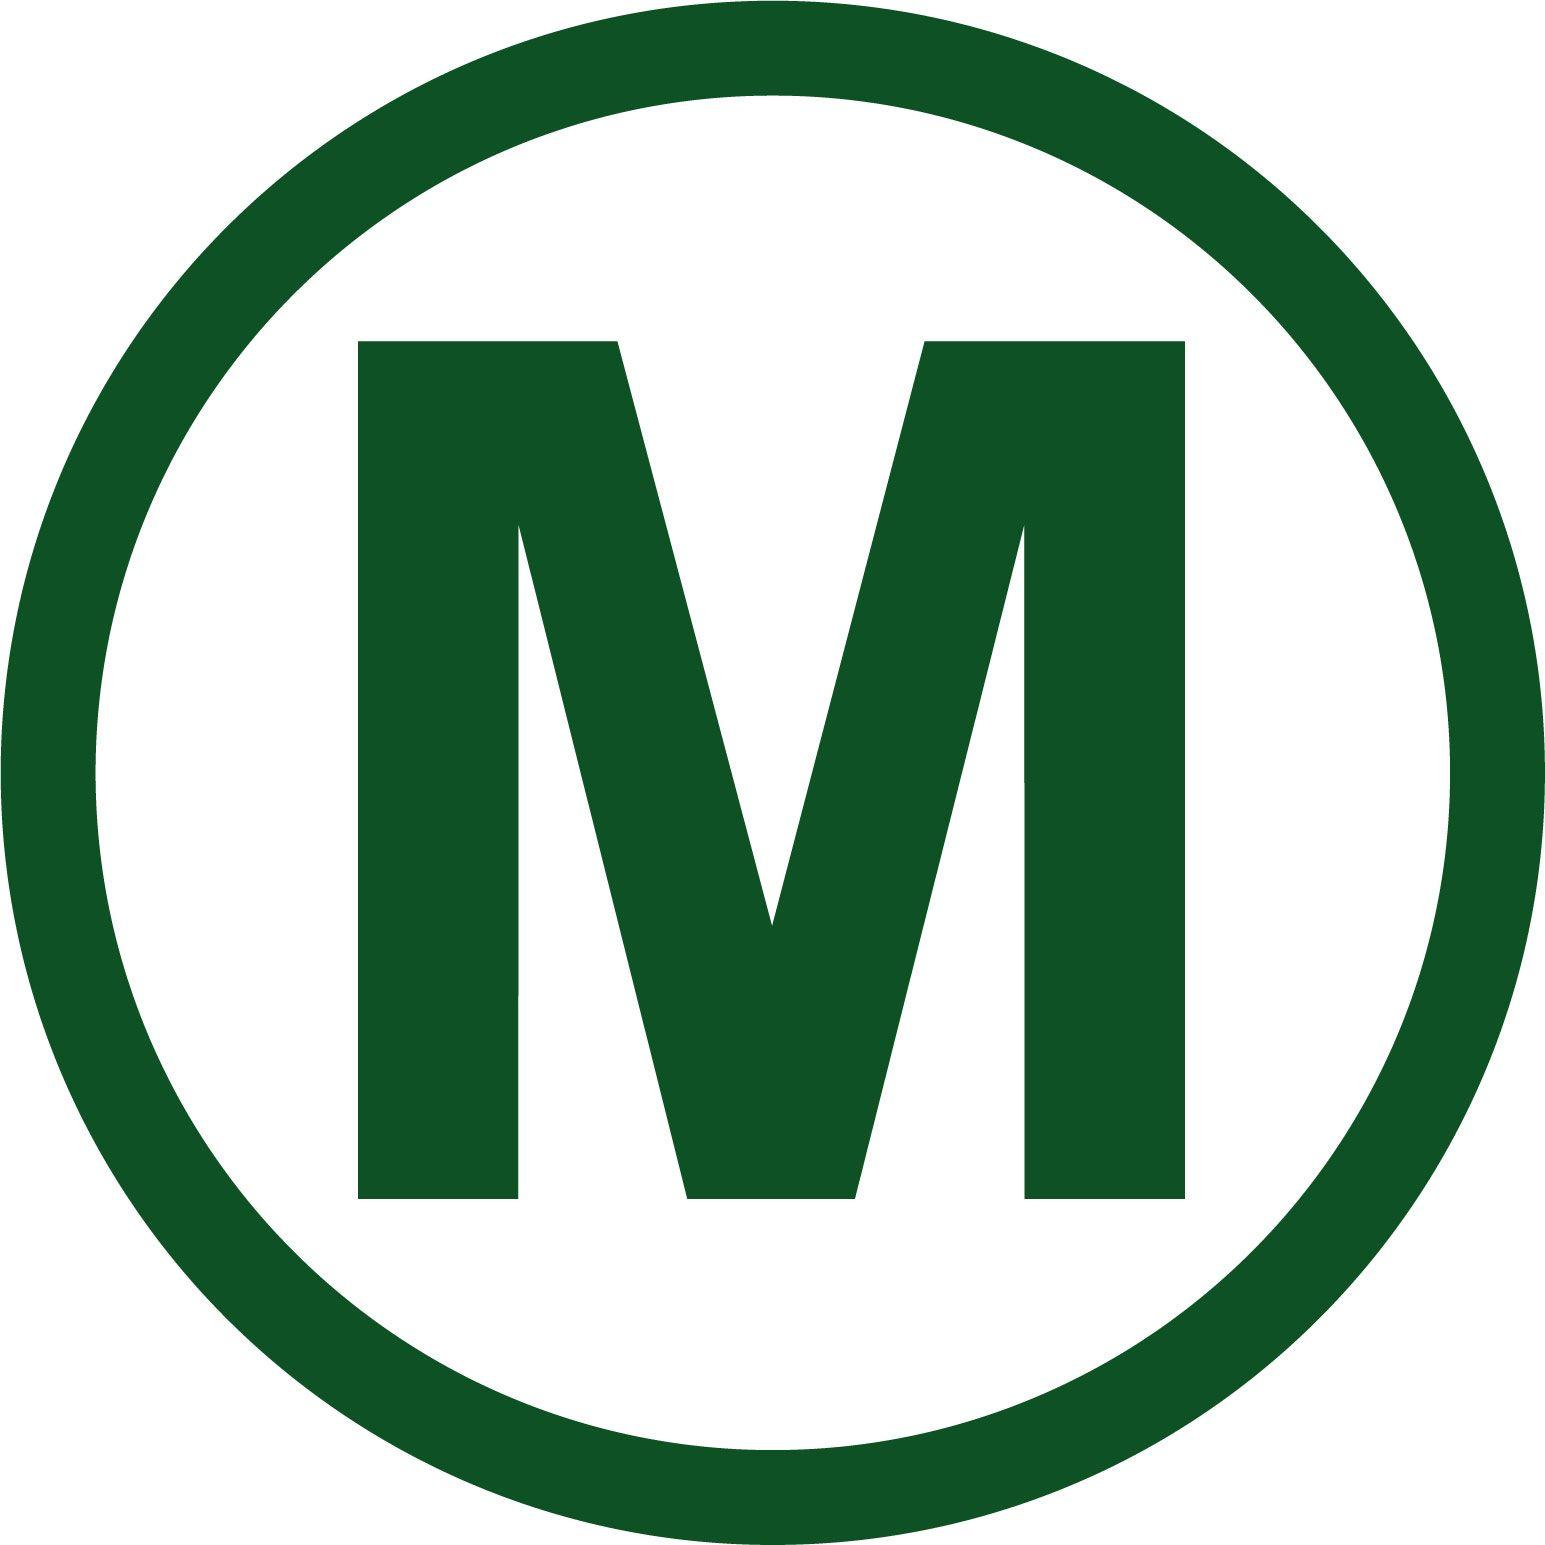 Green M Logo - M as a Logos